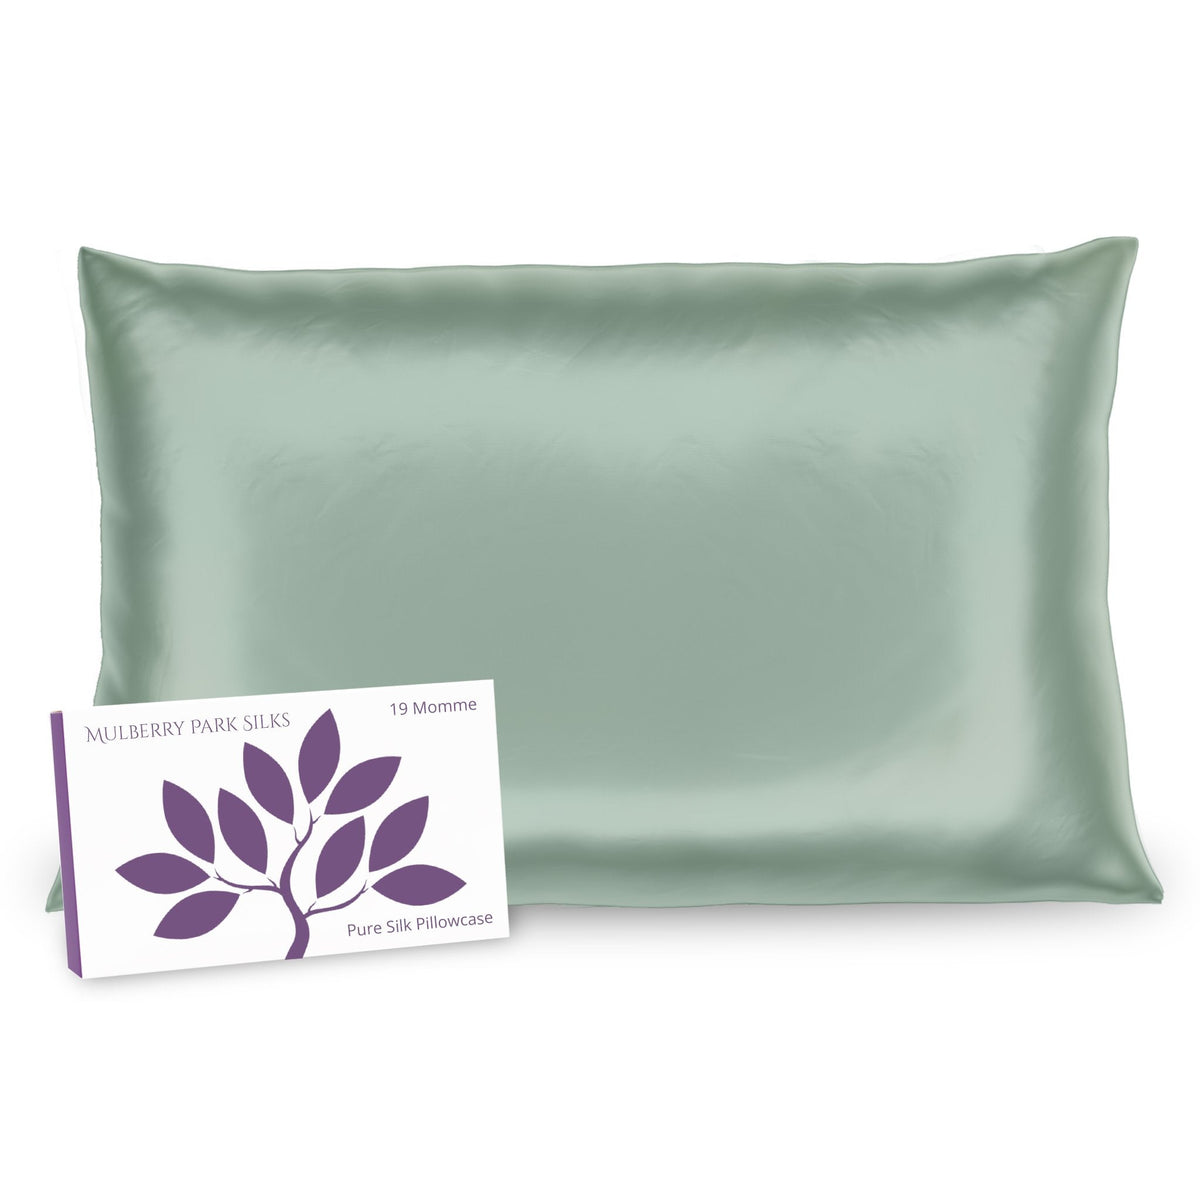 Hidden Zipper of Mulberry Park Silks Deluxe 19 Momme Pure Silk Pillowcase in Green Color